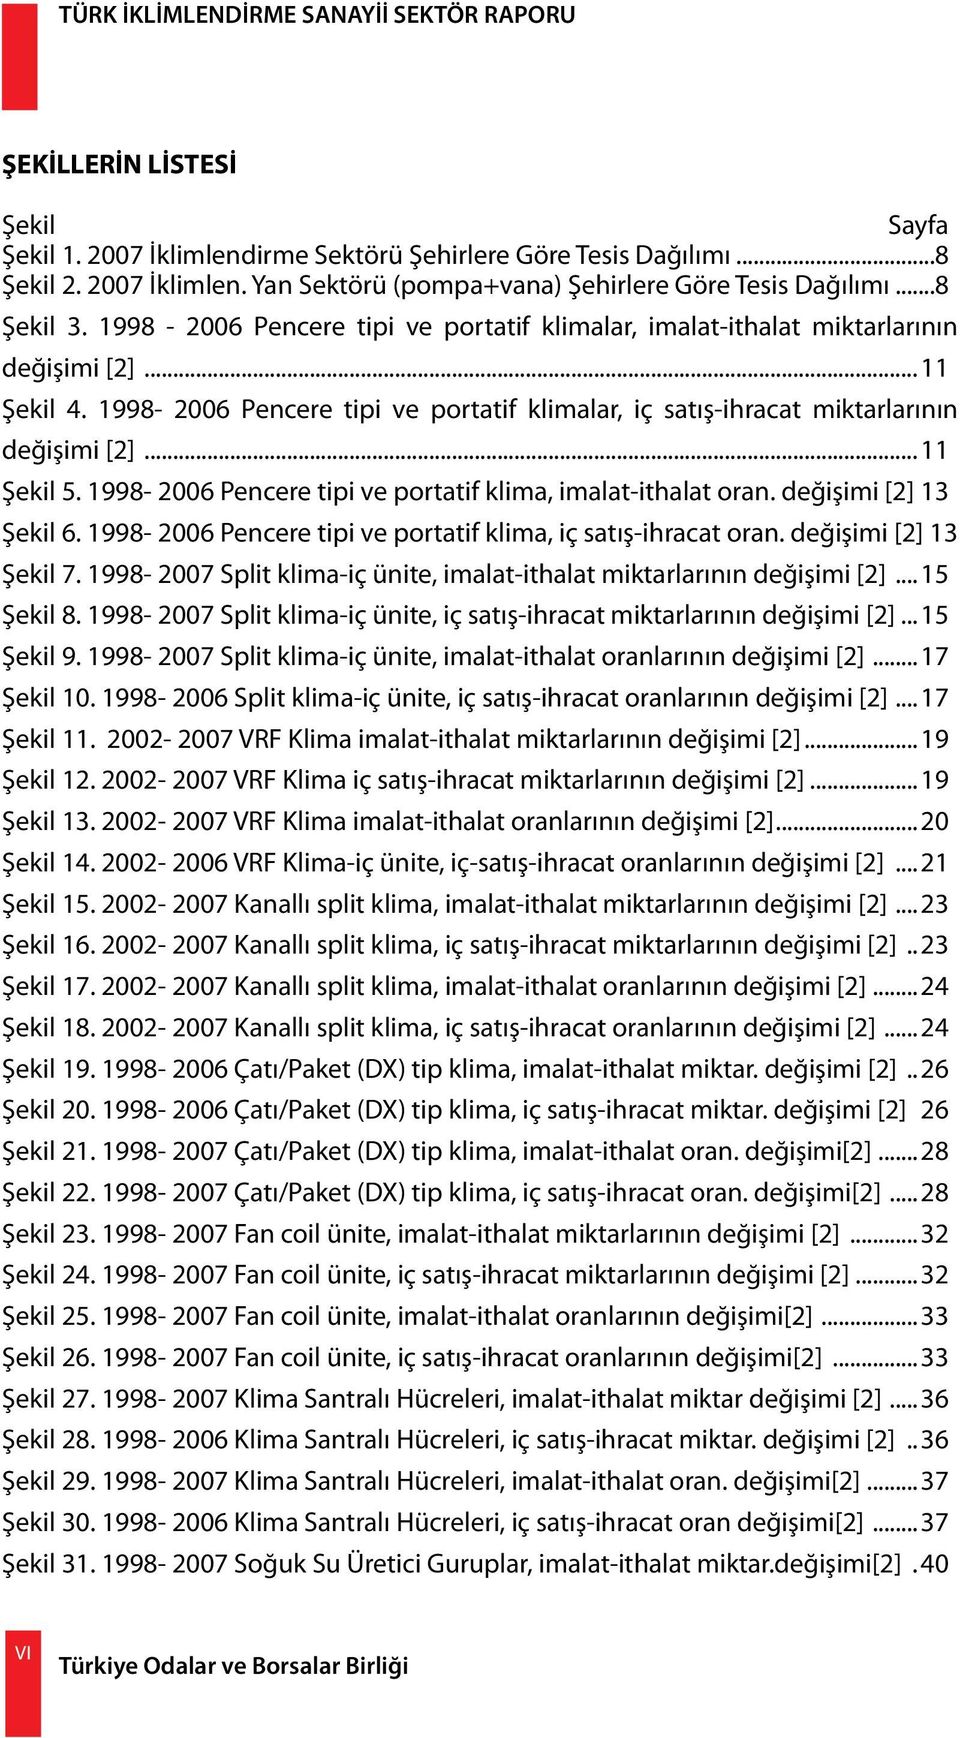 ..11 Şekil 5. 1998-2006 Pencere tipi ve portatif klima, imalat-ithalat oran. değişimi [2].13 Şekil 6. 1998-2006 Pencere tipi ve portatif klima, iç satış-ihracat oran. değişimi [2].13 Şekil 7.